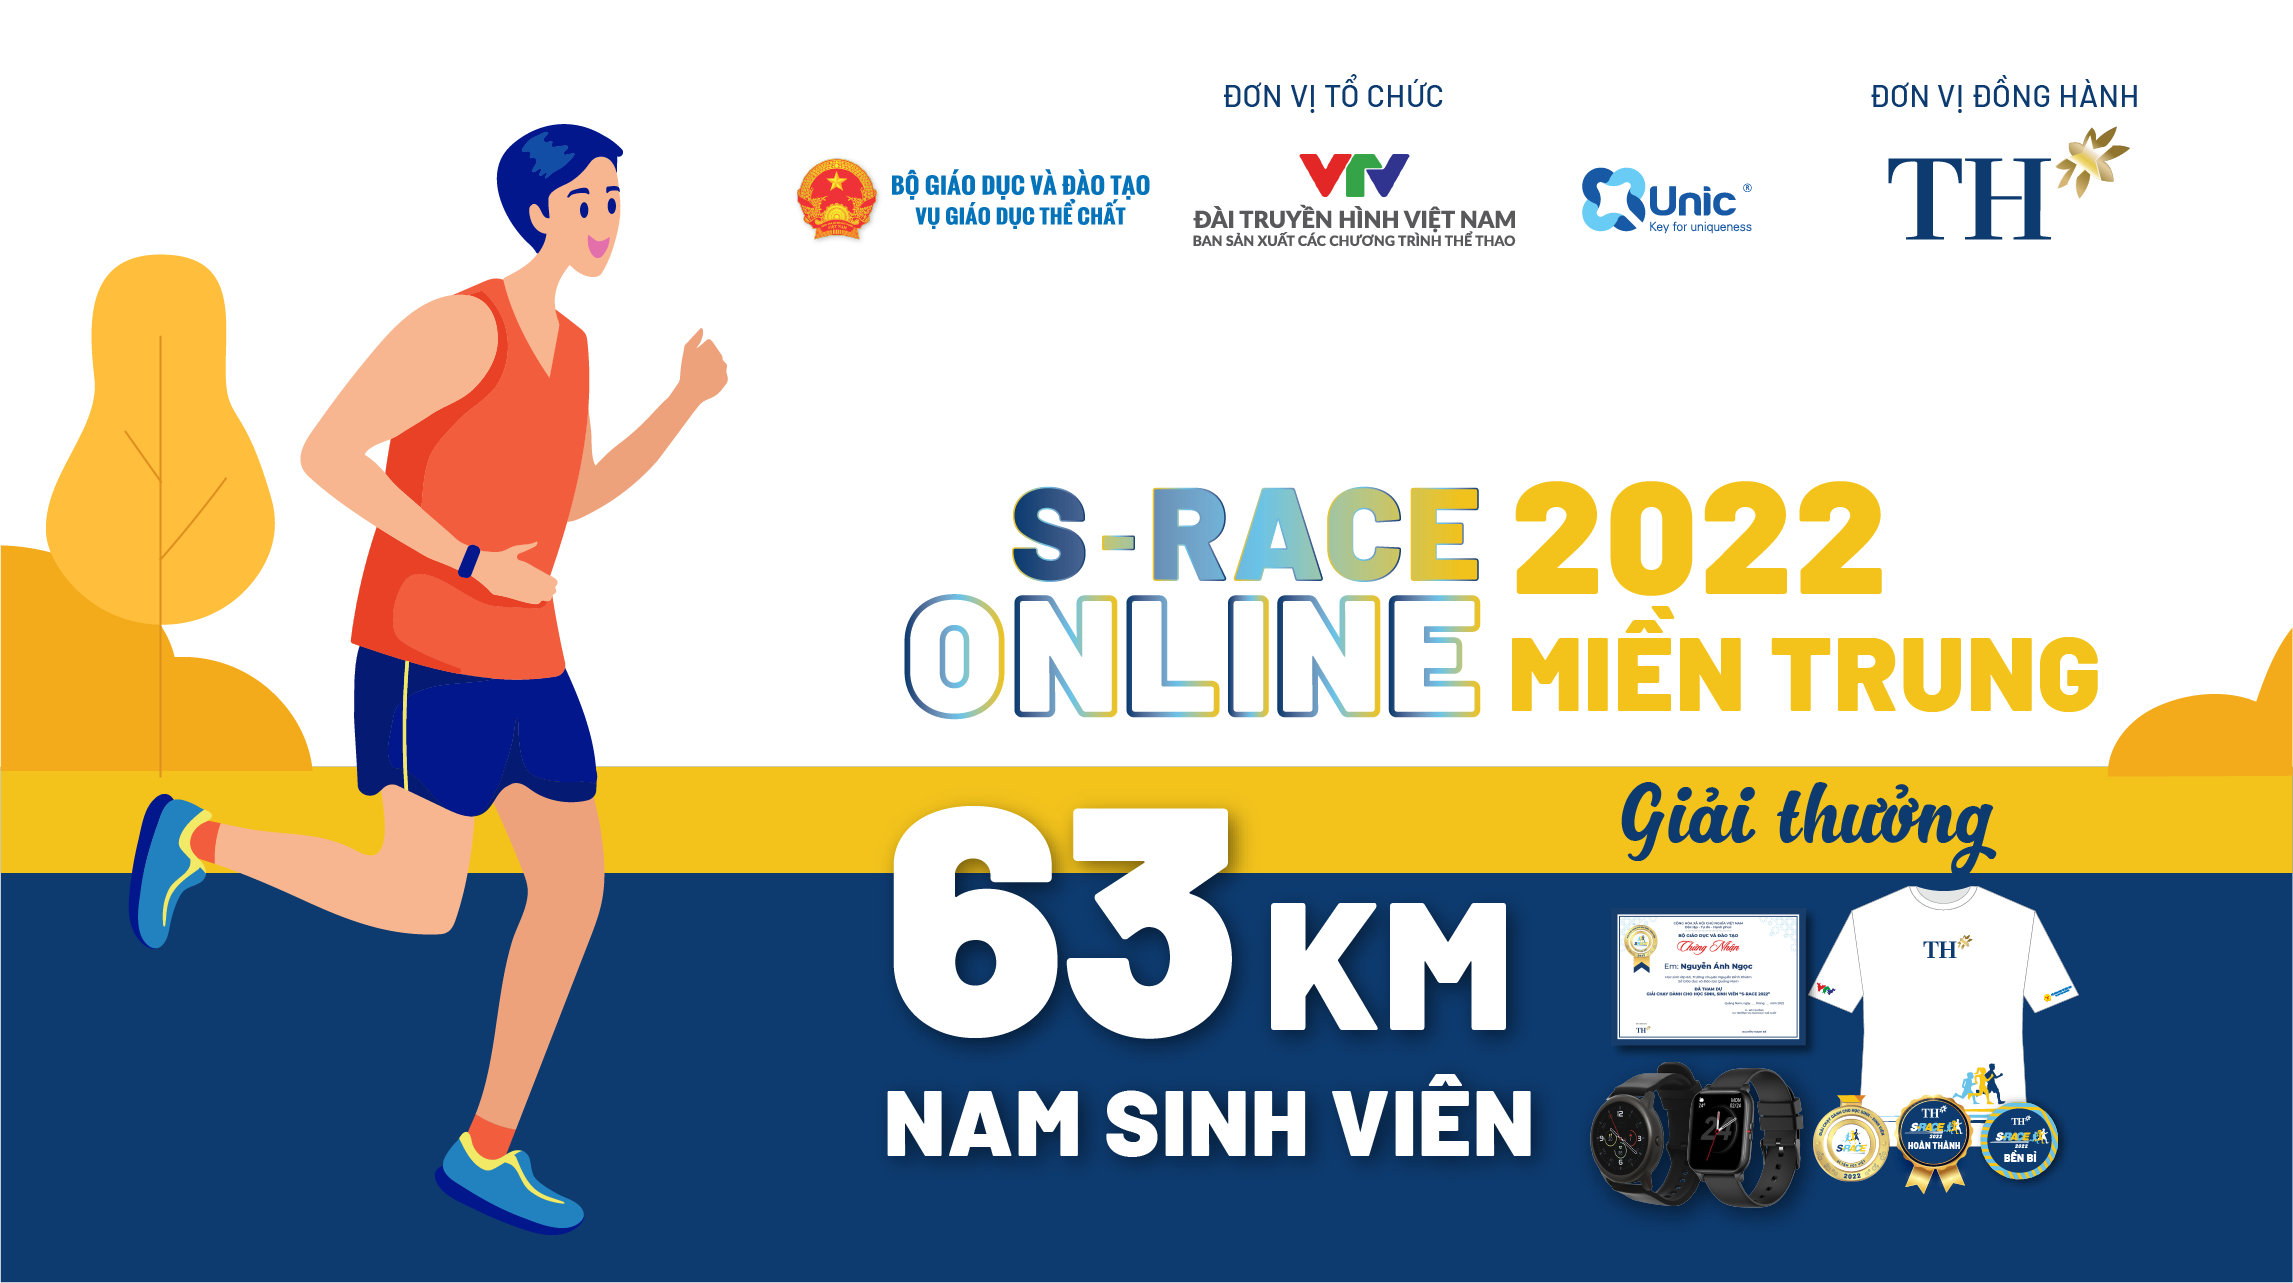 63 KM NAM SINH VIÊN (S-Race Online miền Trung)